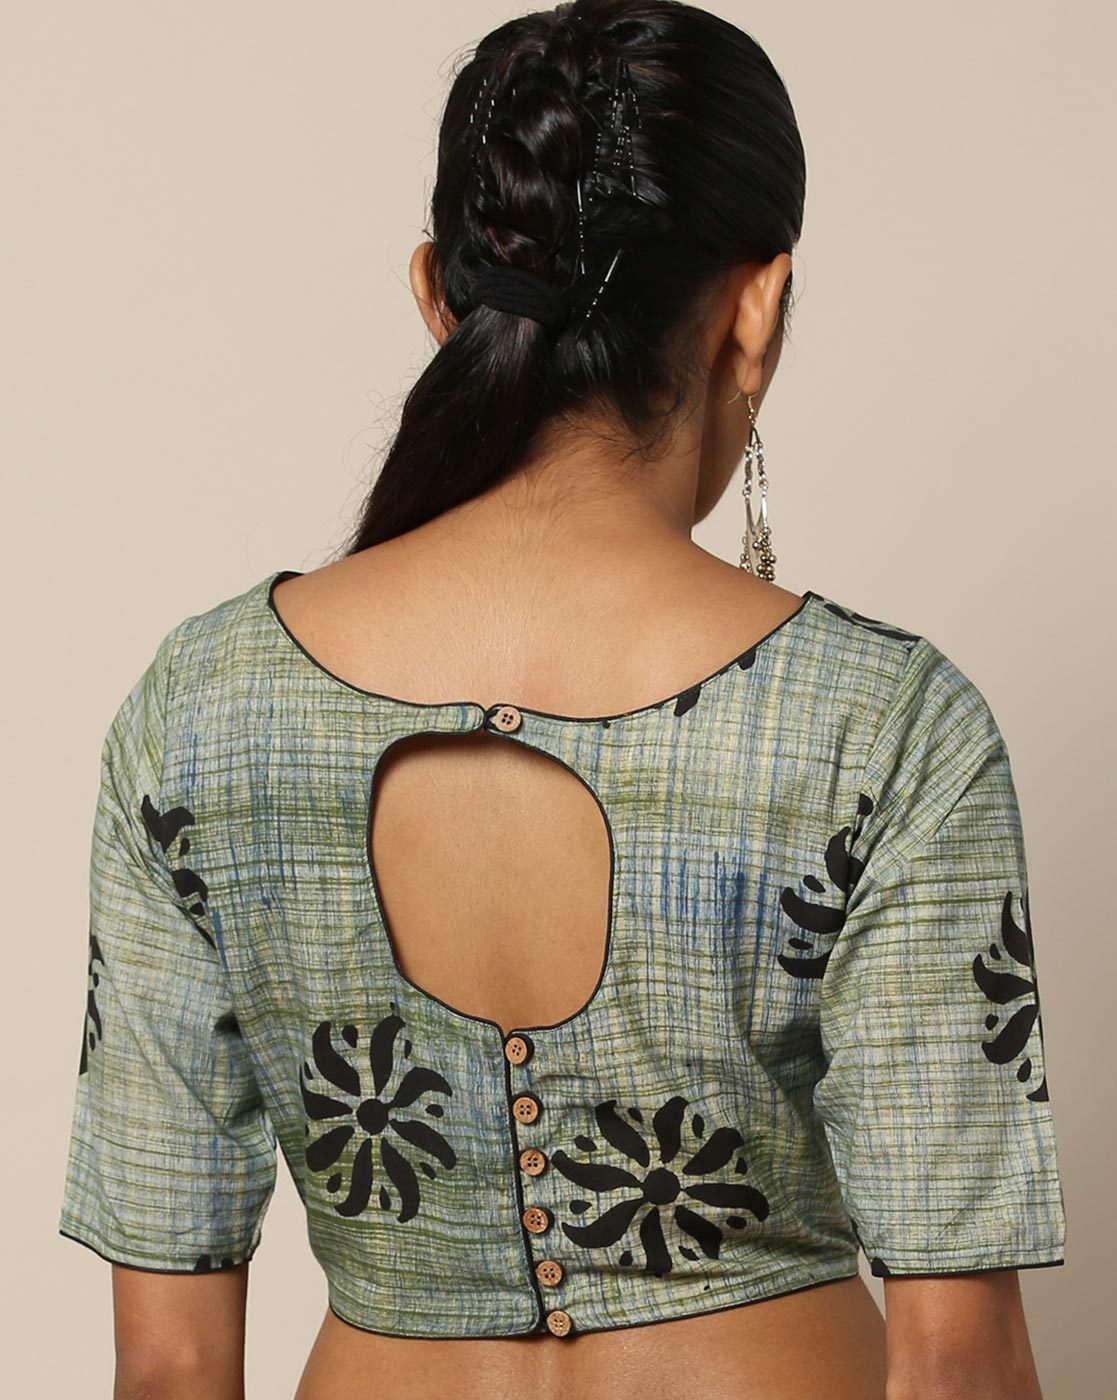 Cotton saree blouse designs back side – 50 Latest Saree Blouse ...